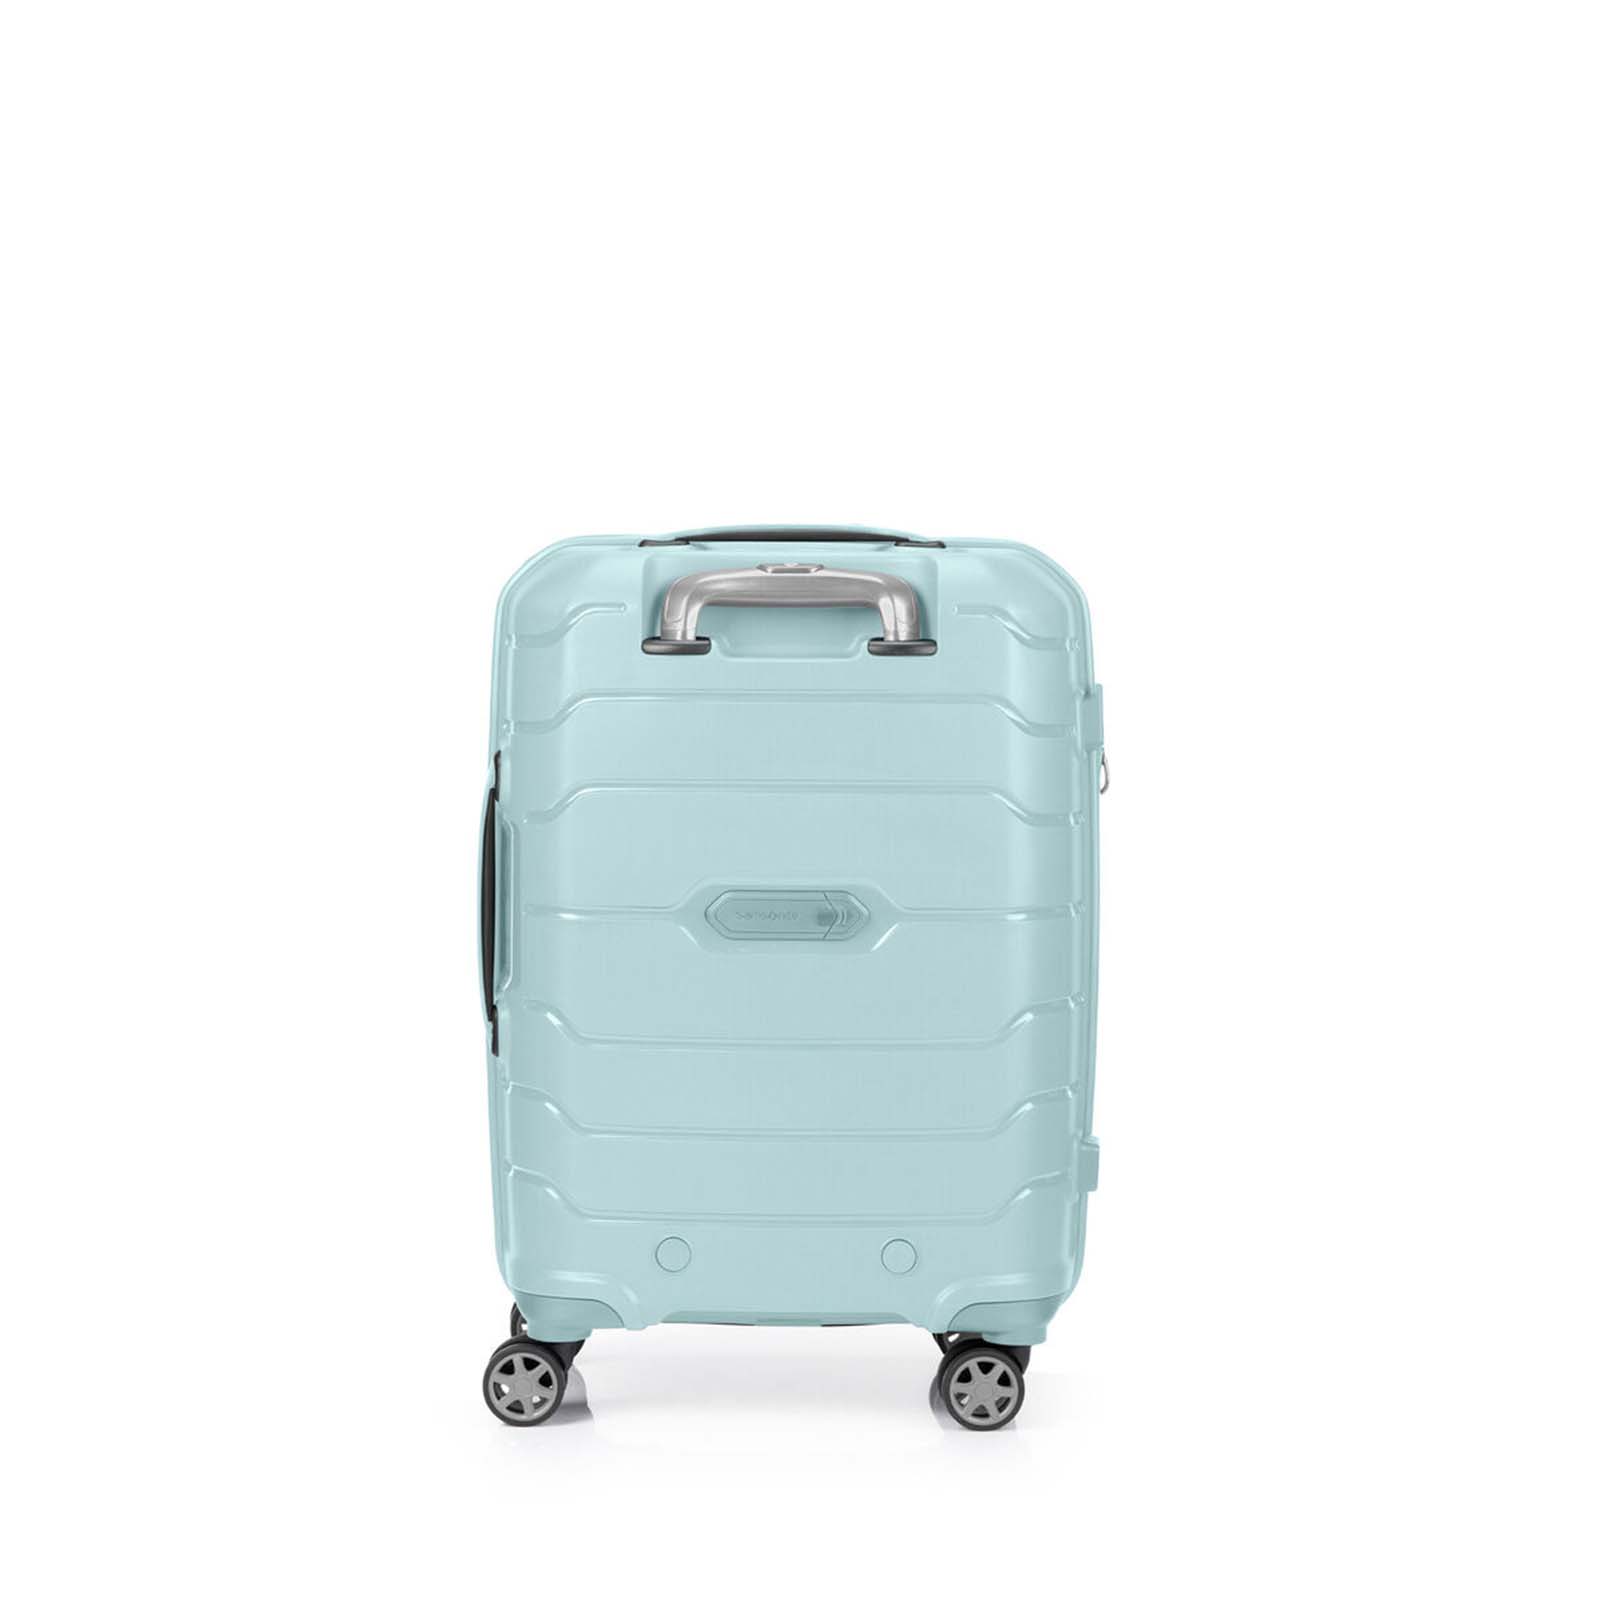 Samsonite-Oc2lite-55cm-Carry-On-Suitcase-Lagoon-Blue-Back